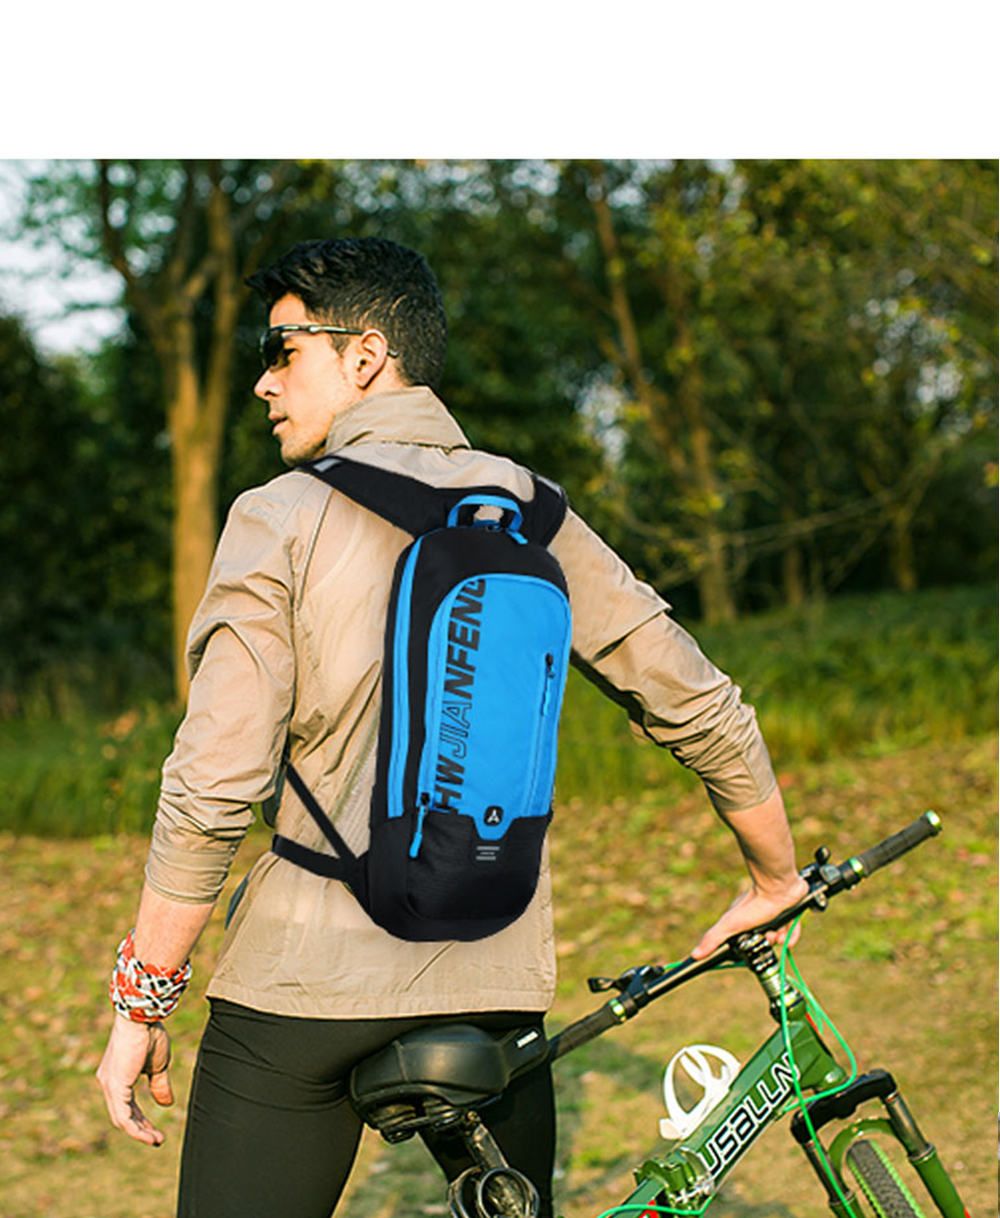 HUWAIJIANFENG Waterproof Travel Wear-resistant Backpack for Men